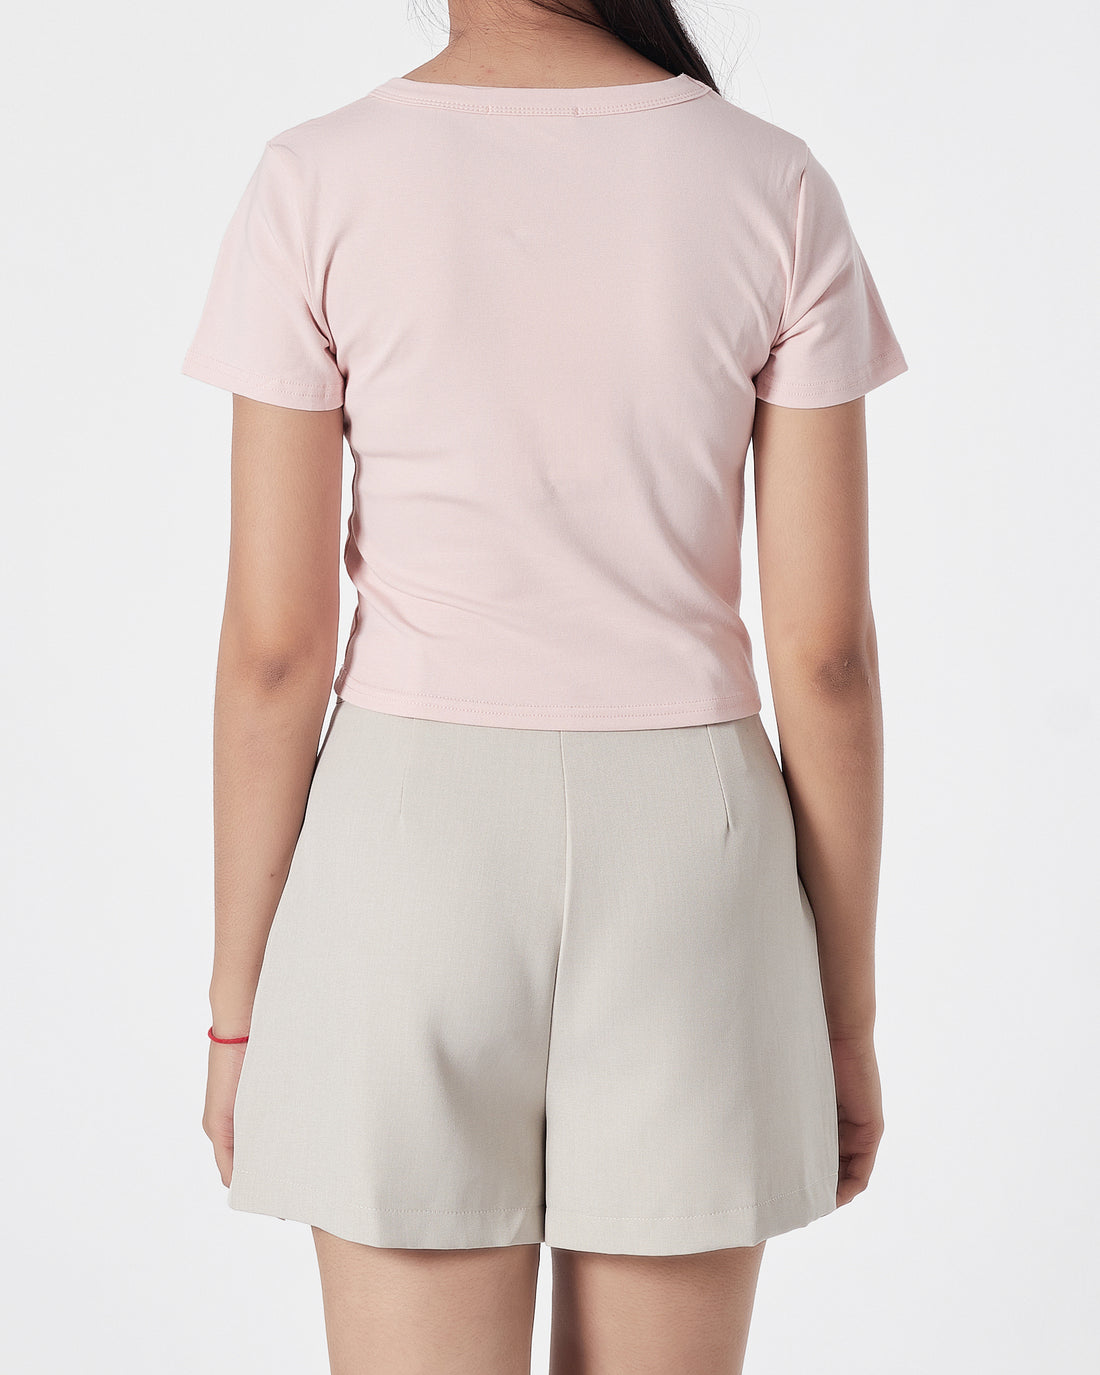 Light Pink Lady T-Shirt Crop Top 10.90